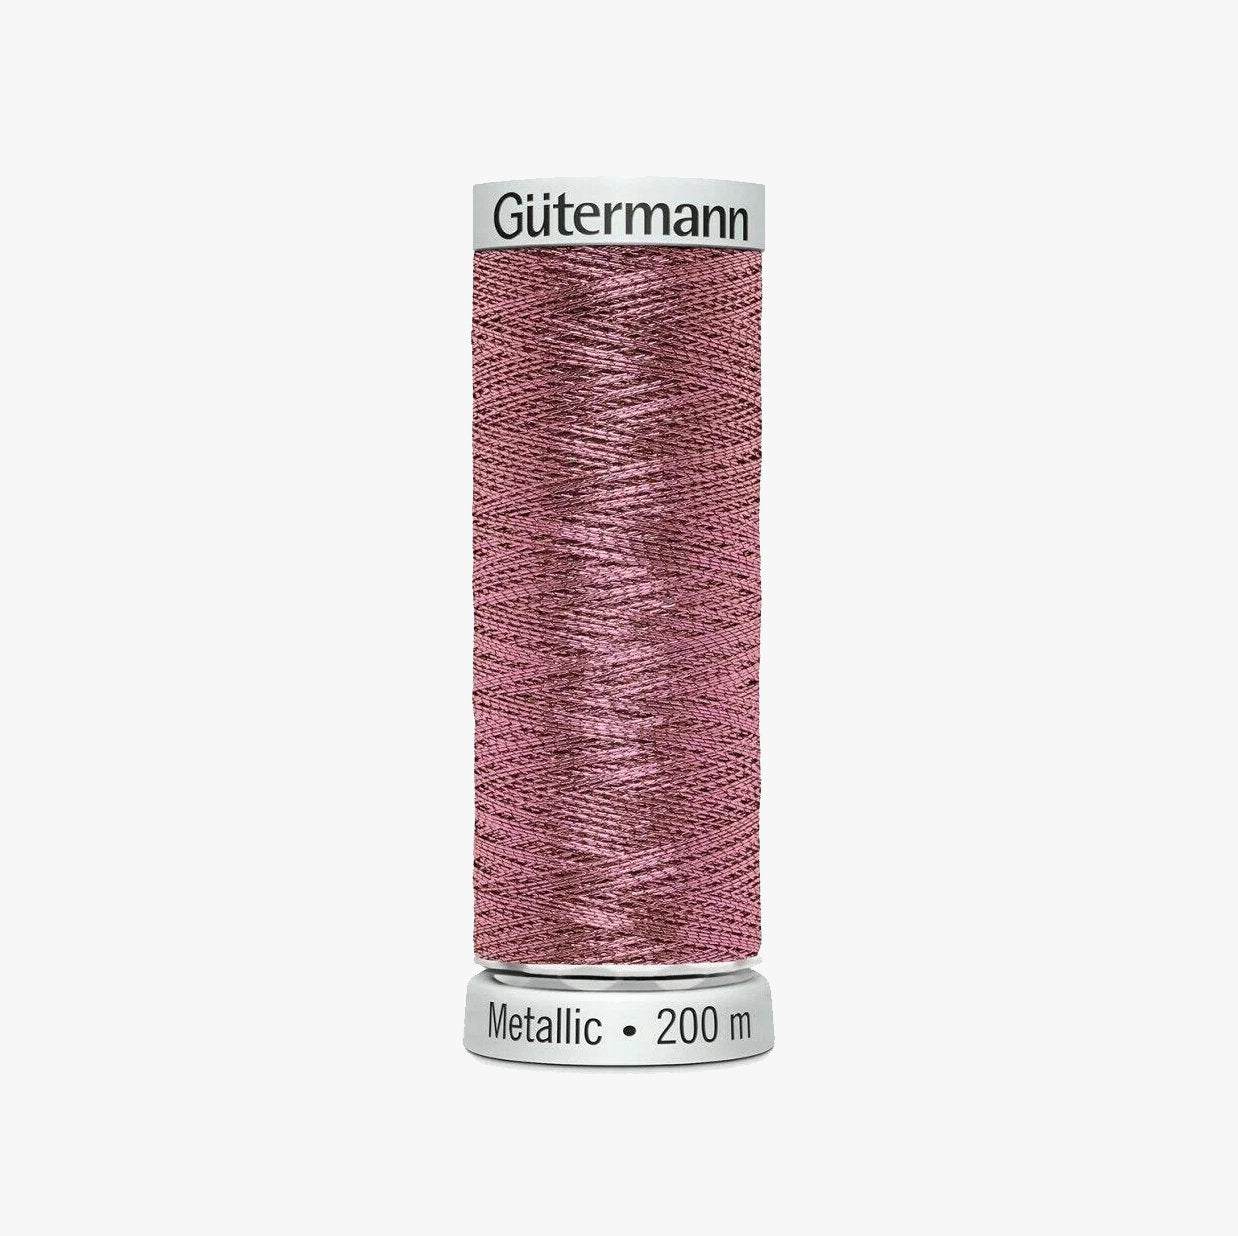 7012 Gutermann Metallic Thread 200m - Metallic Effect for Decorative Seams and Machine Embroidery